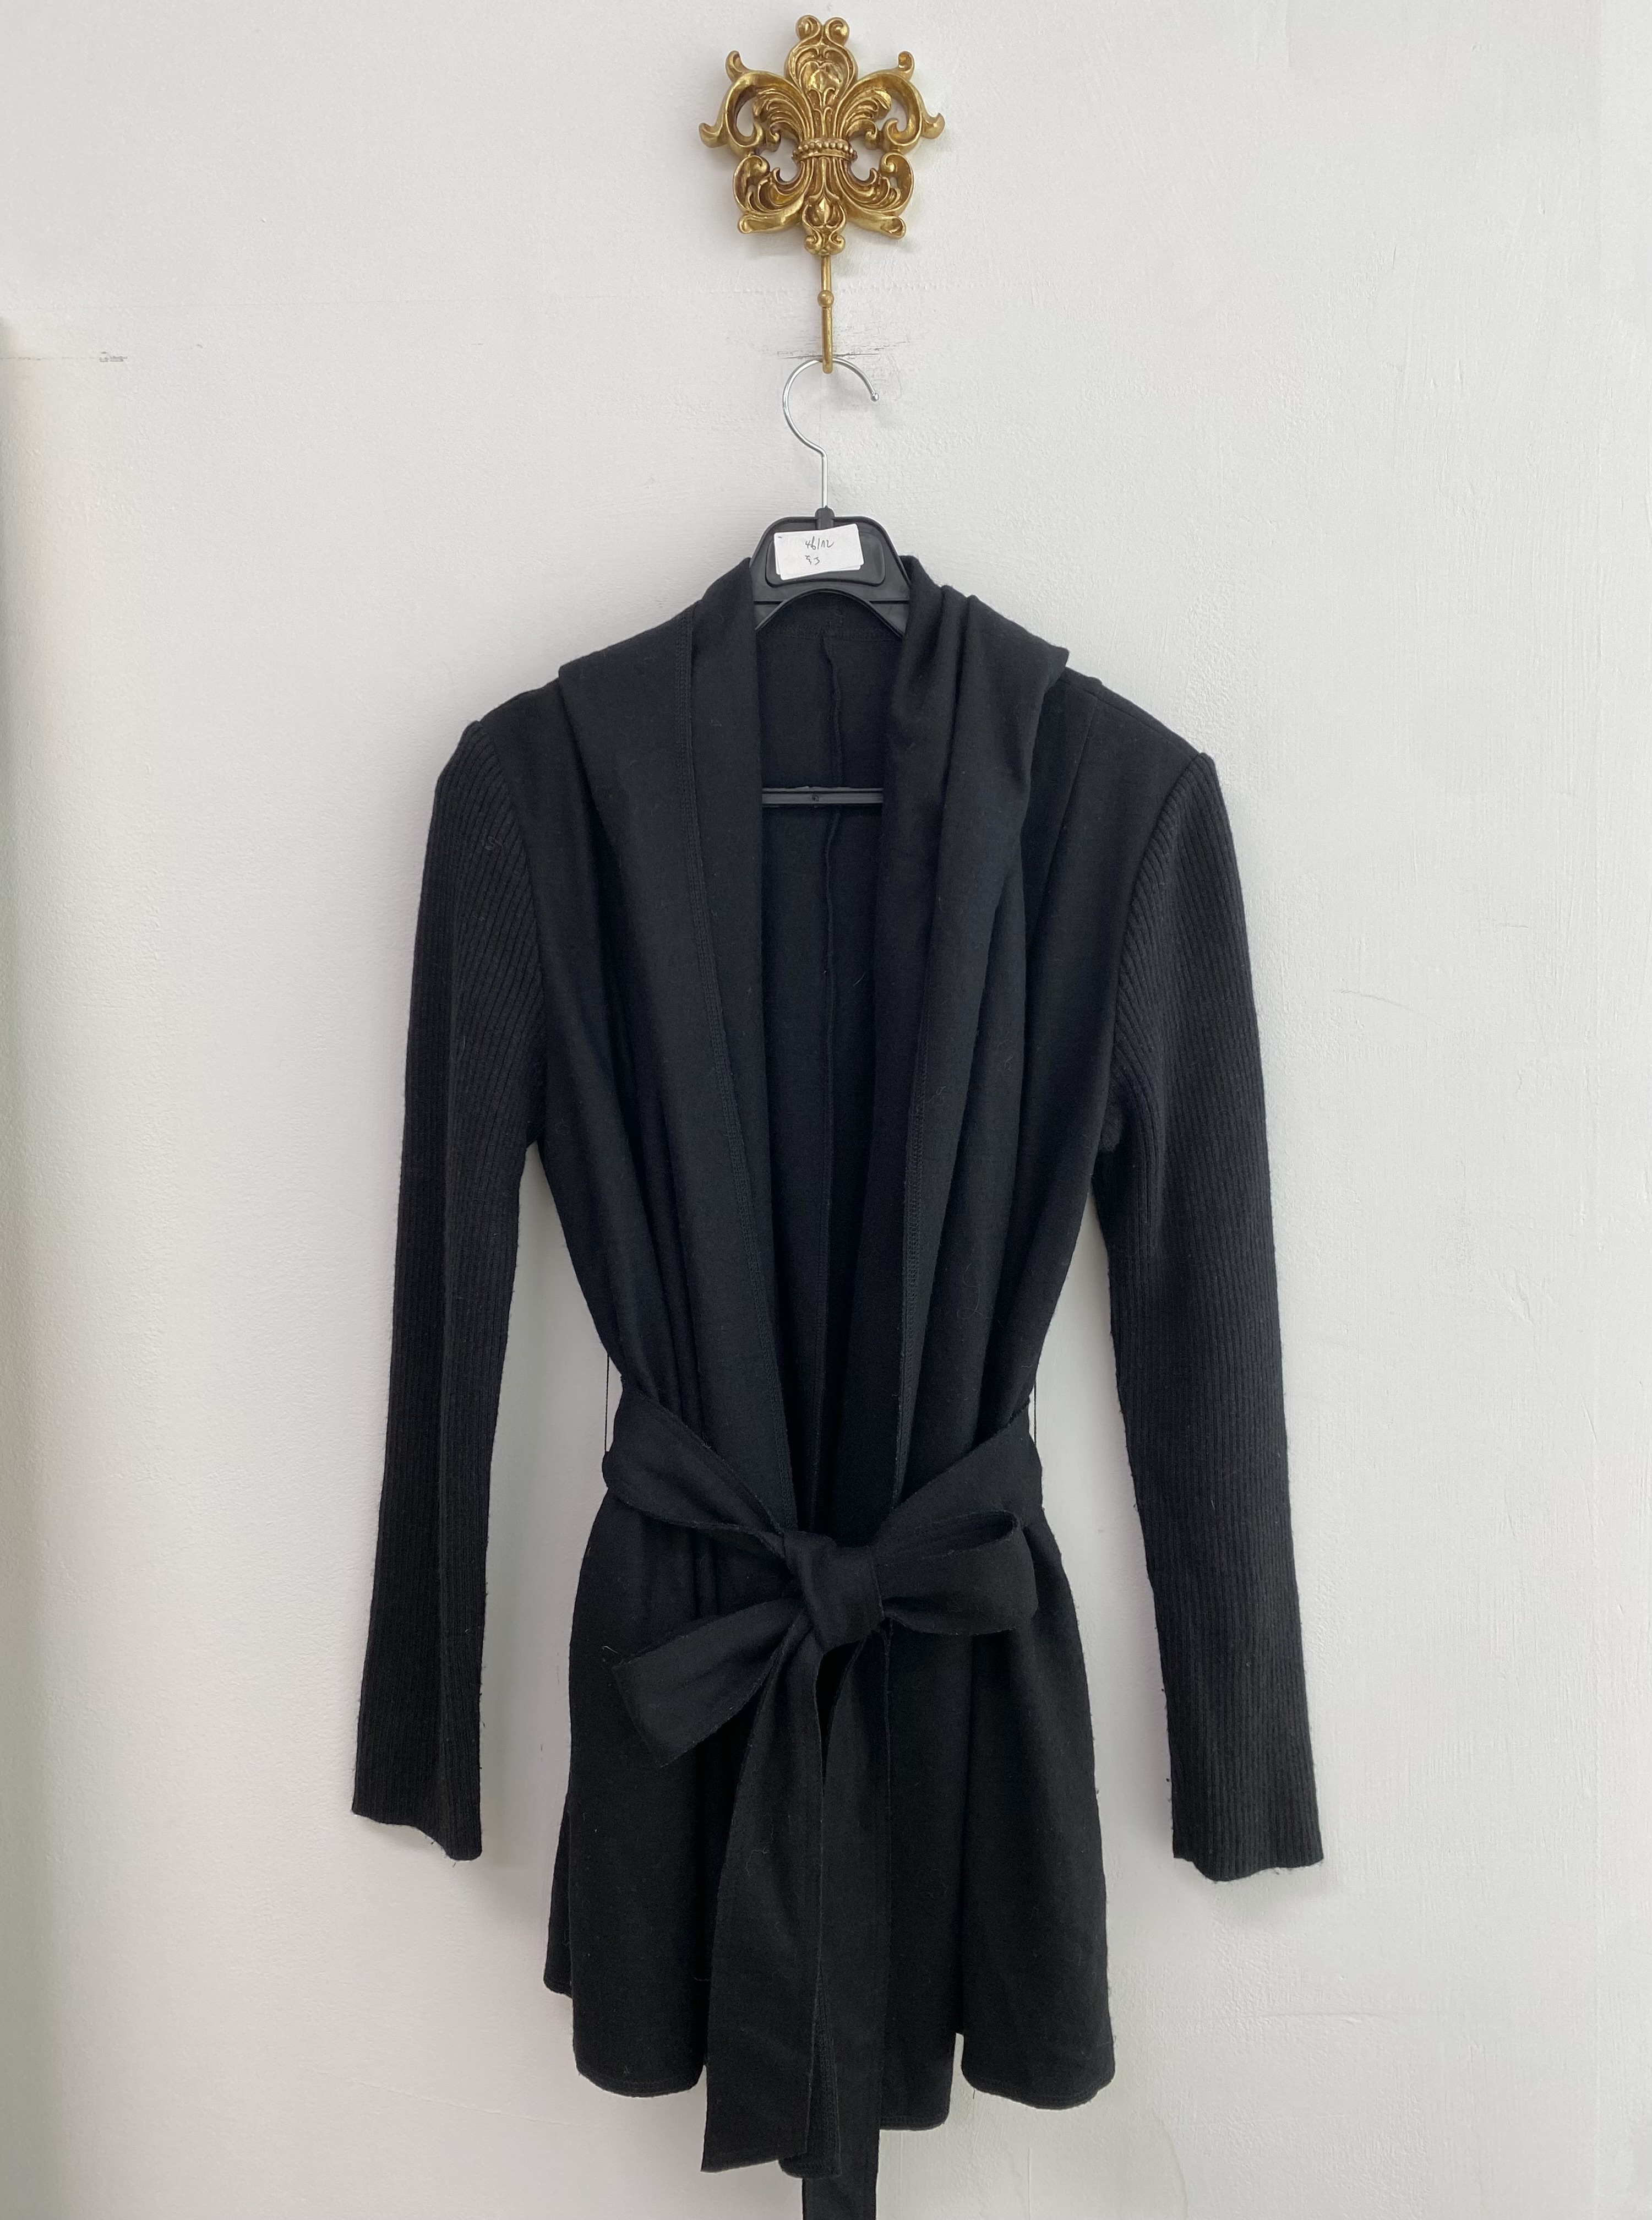 Black knit open robe cardigan